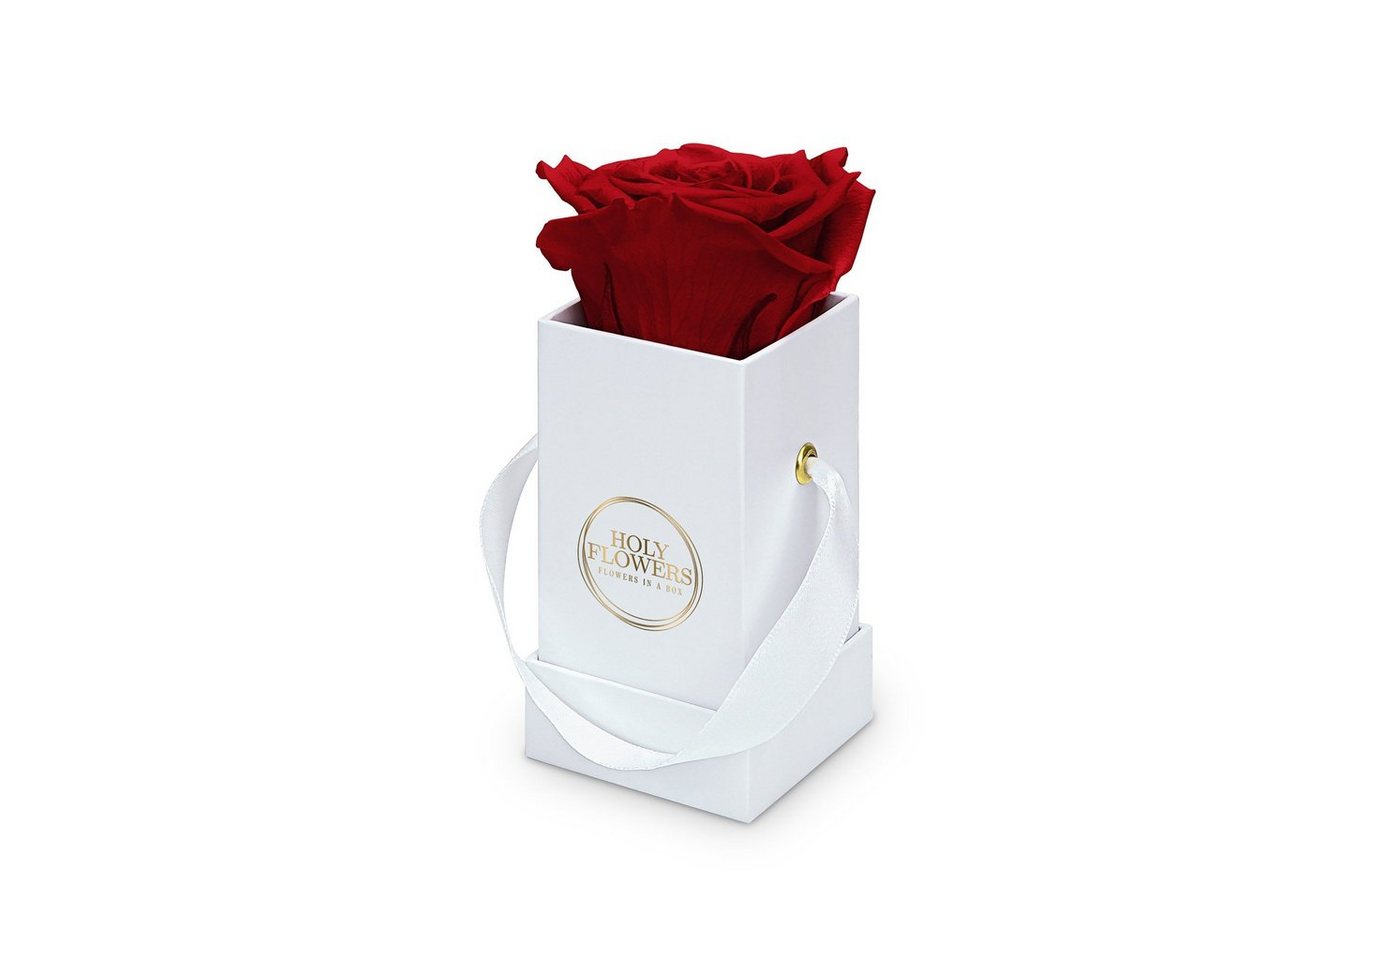 Kunstblume Eckige Rosenbox in weiß mit 1er Infinity Rose I 1- 3 Jahre haltbar Infinity Rose, Holy Flowers, Höhe 9 cm von Holy Flowers